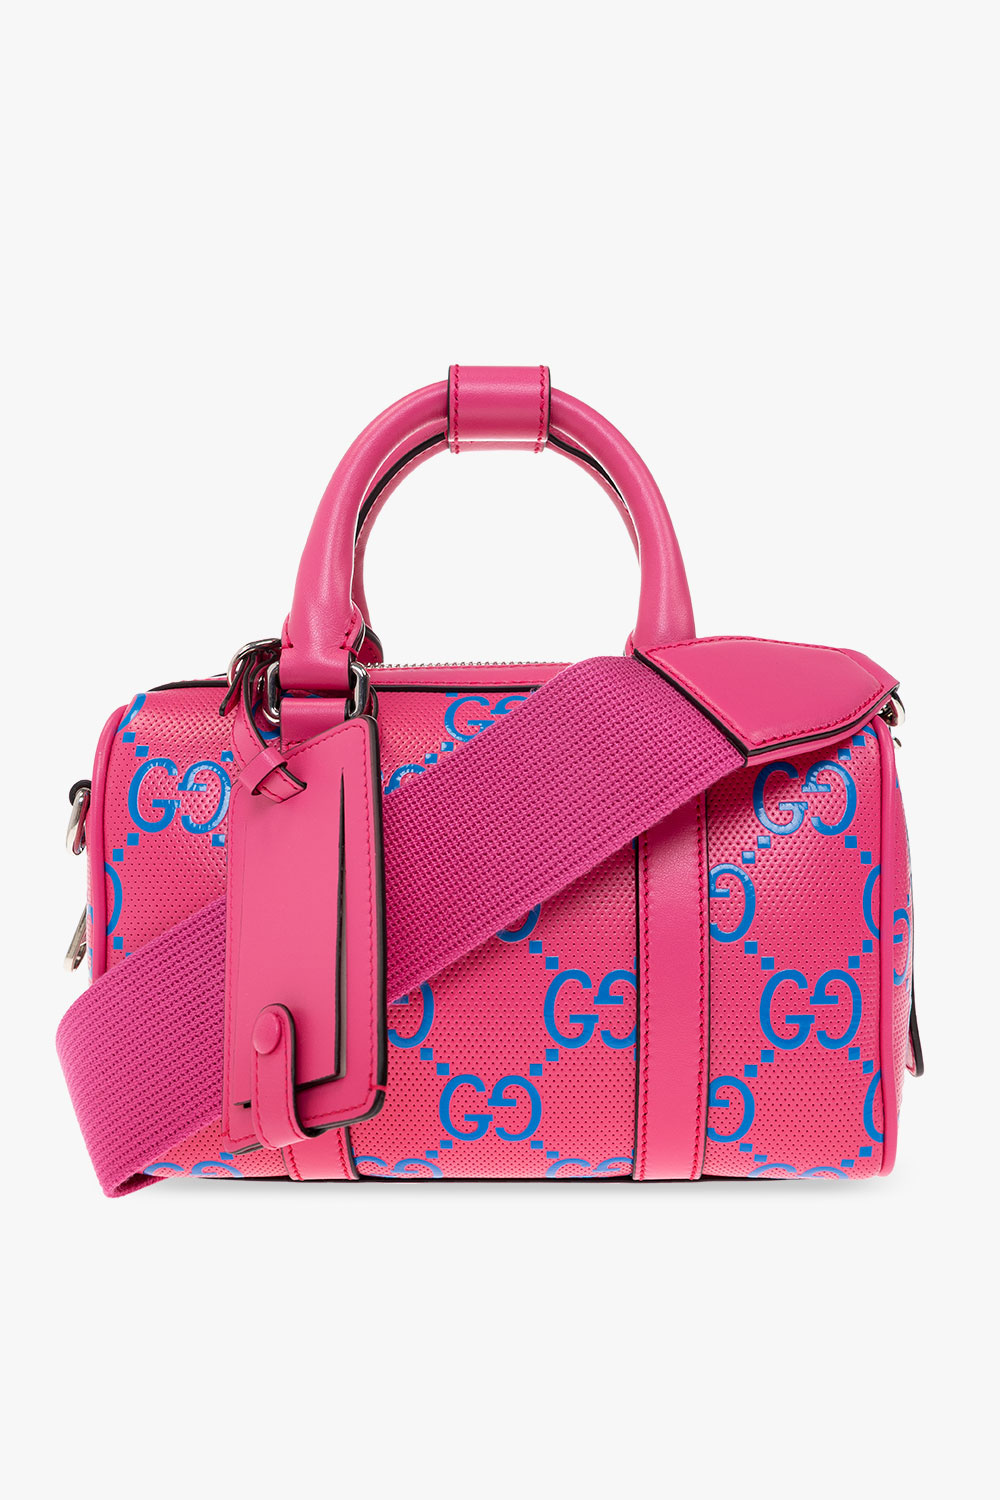 Gucci, Bags, Small Gucci Joy Boston Bag